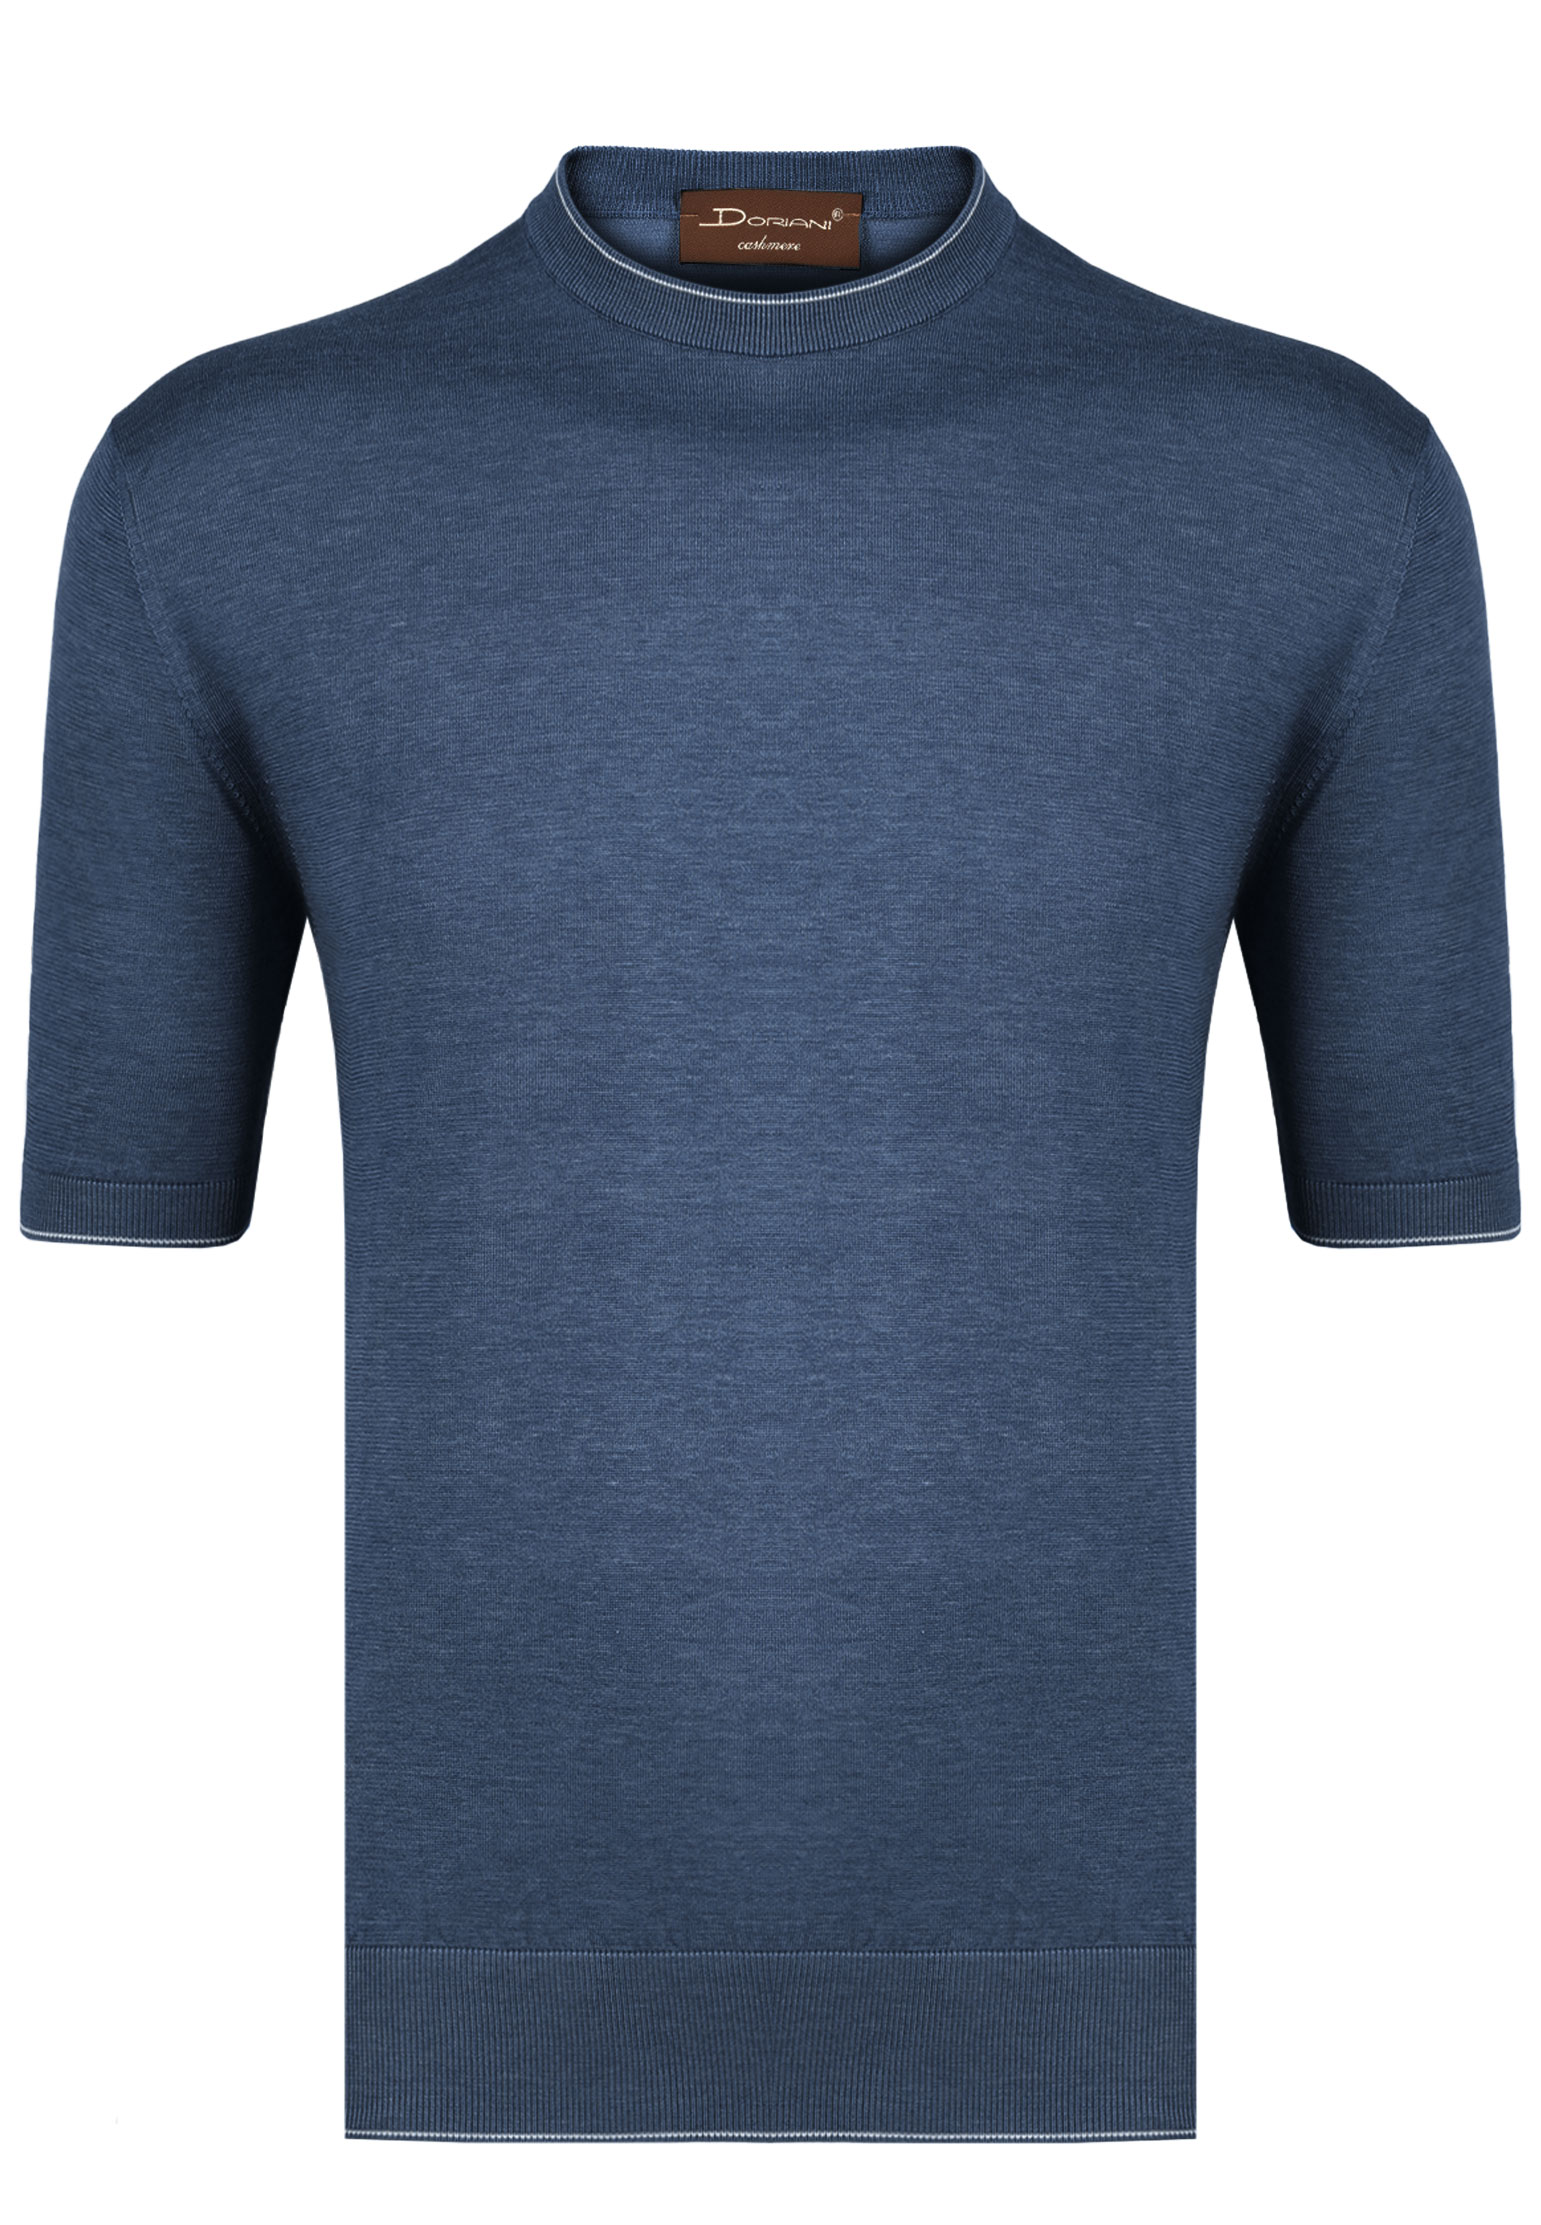 Пуловер DORIANI Синий, размер 48 178348 - фото 1